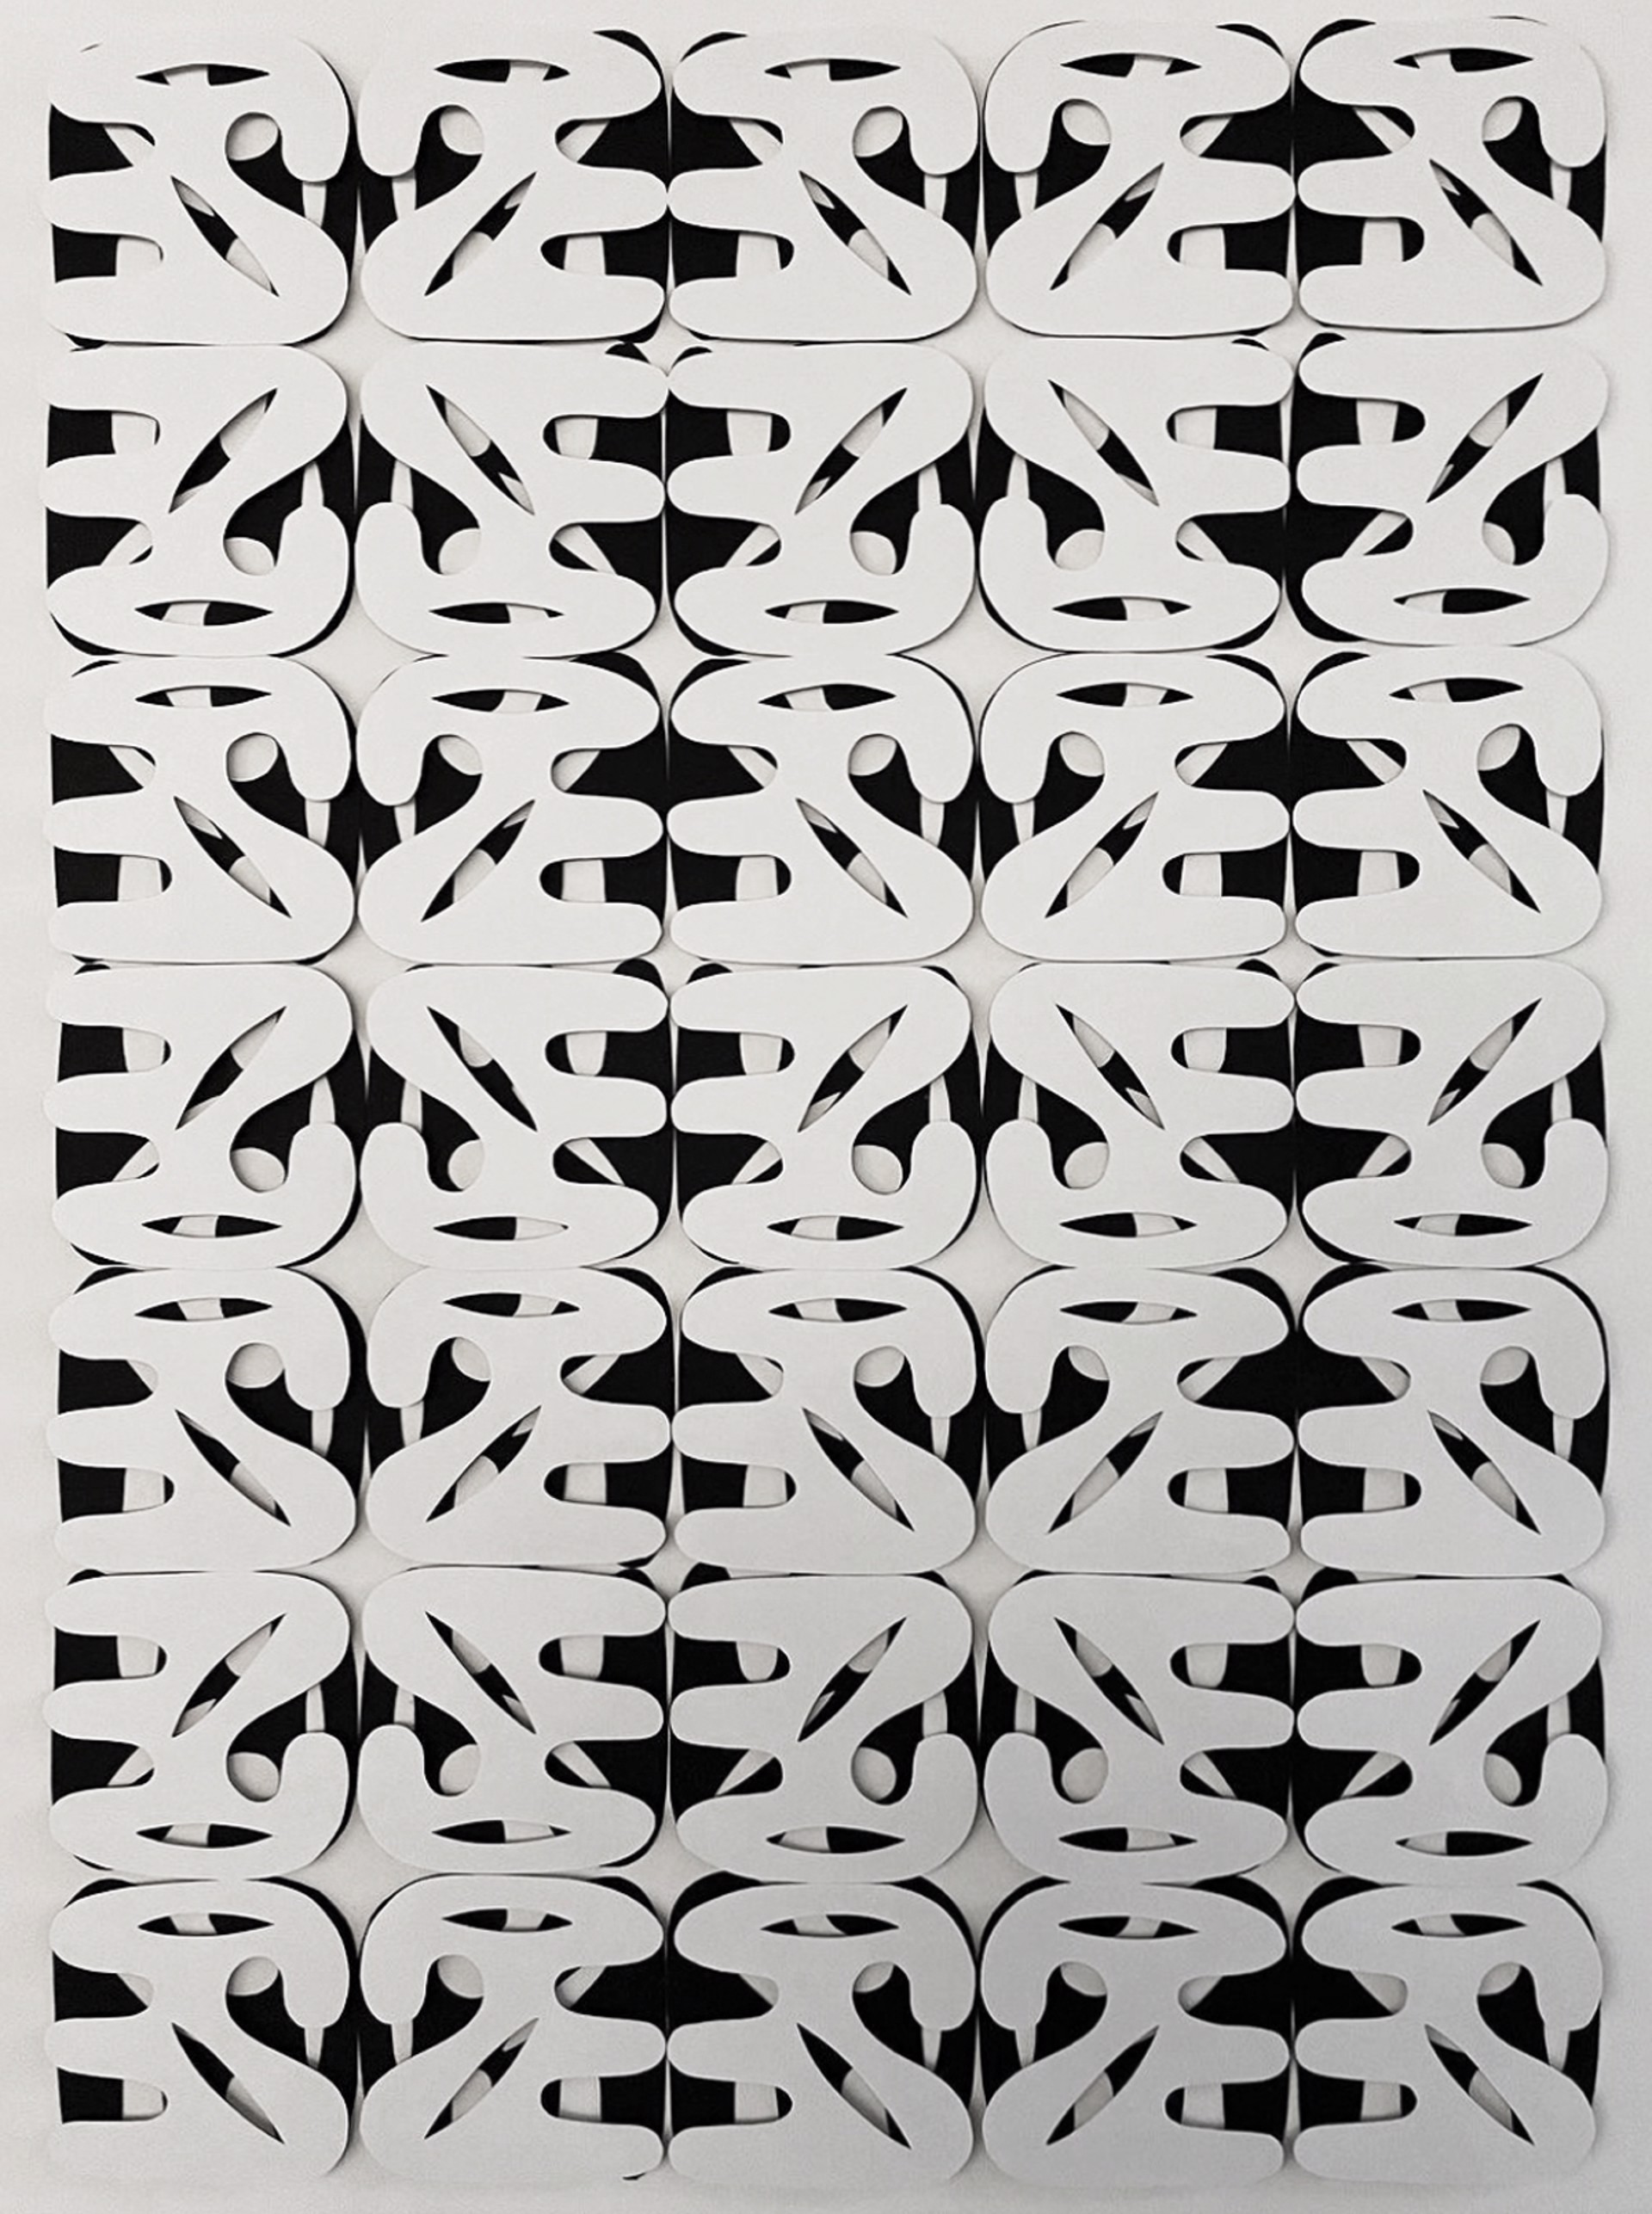 Single Shape System (Black & White) by Esteban Patino